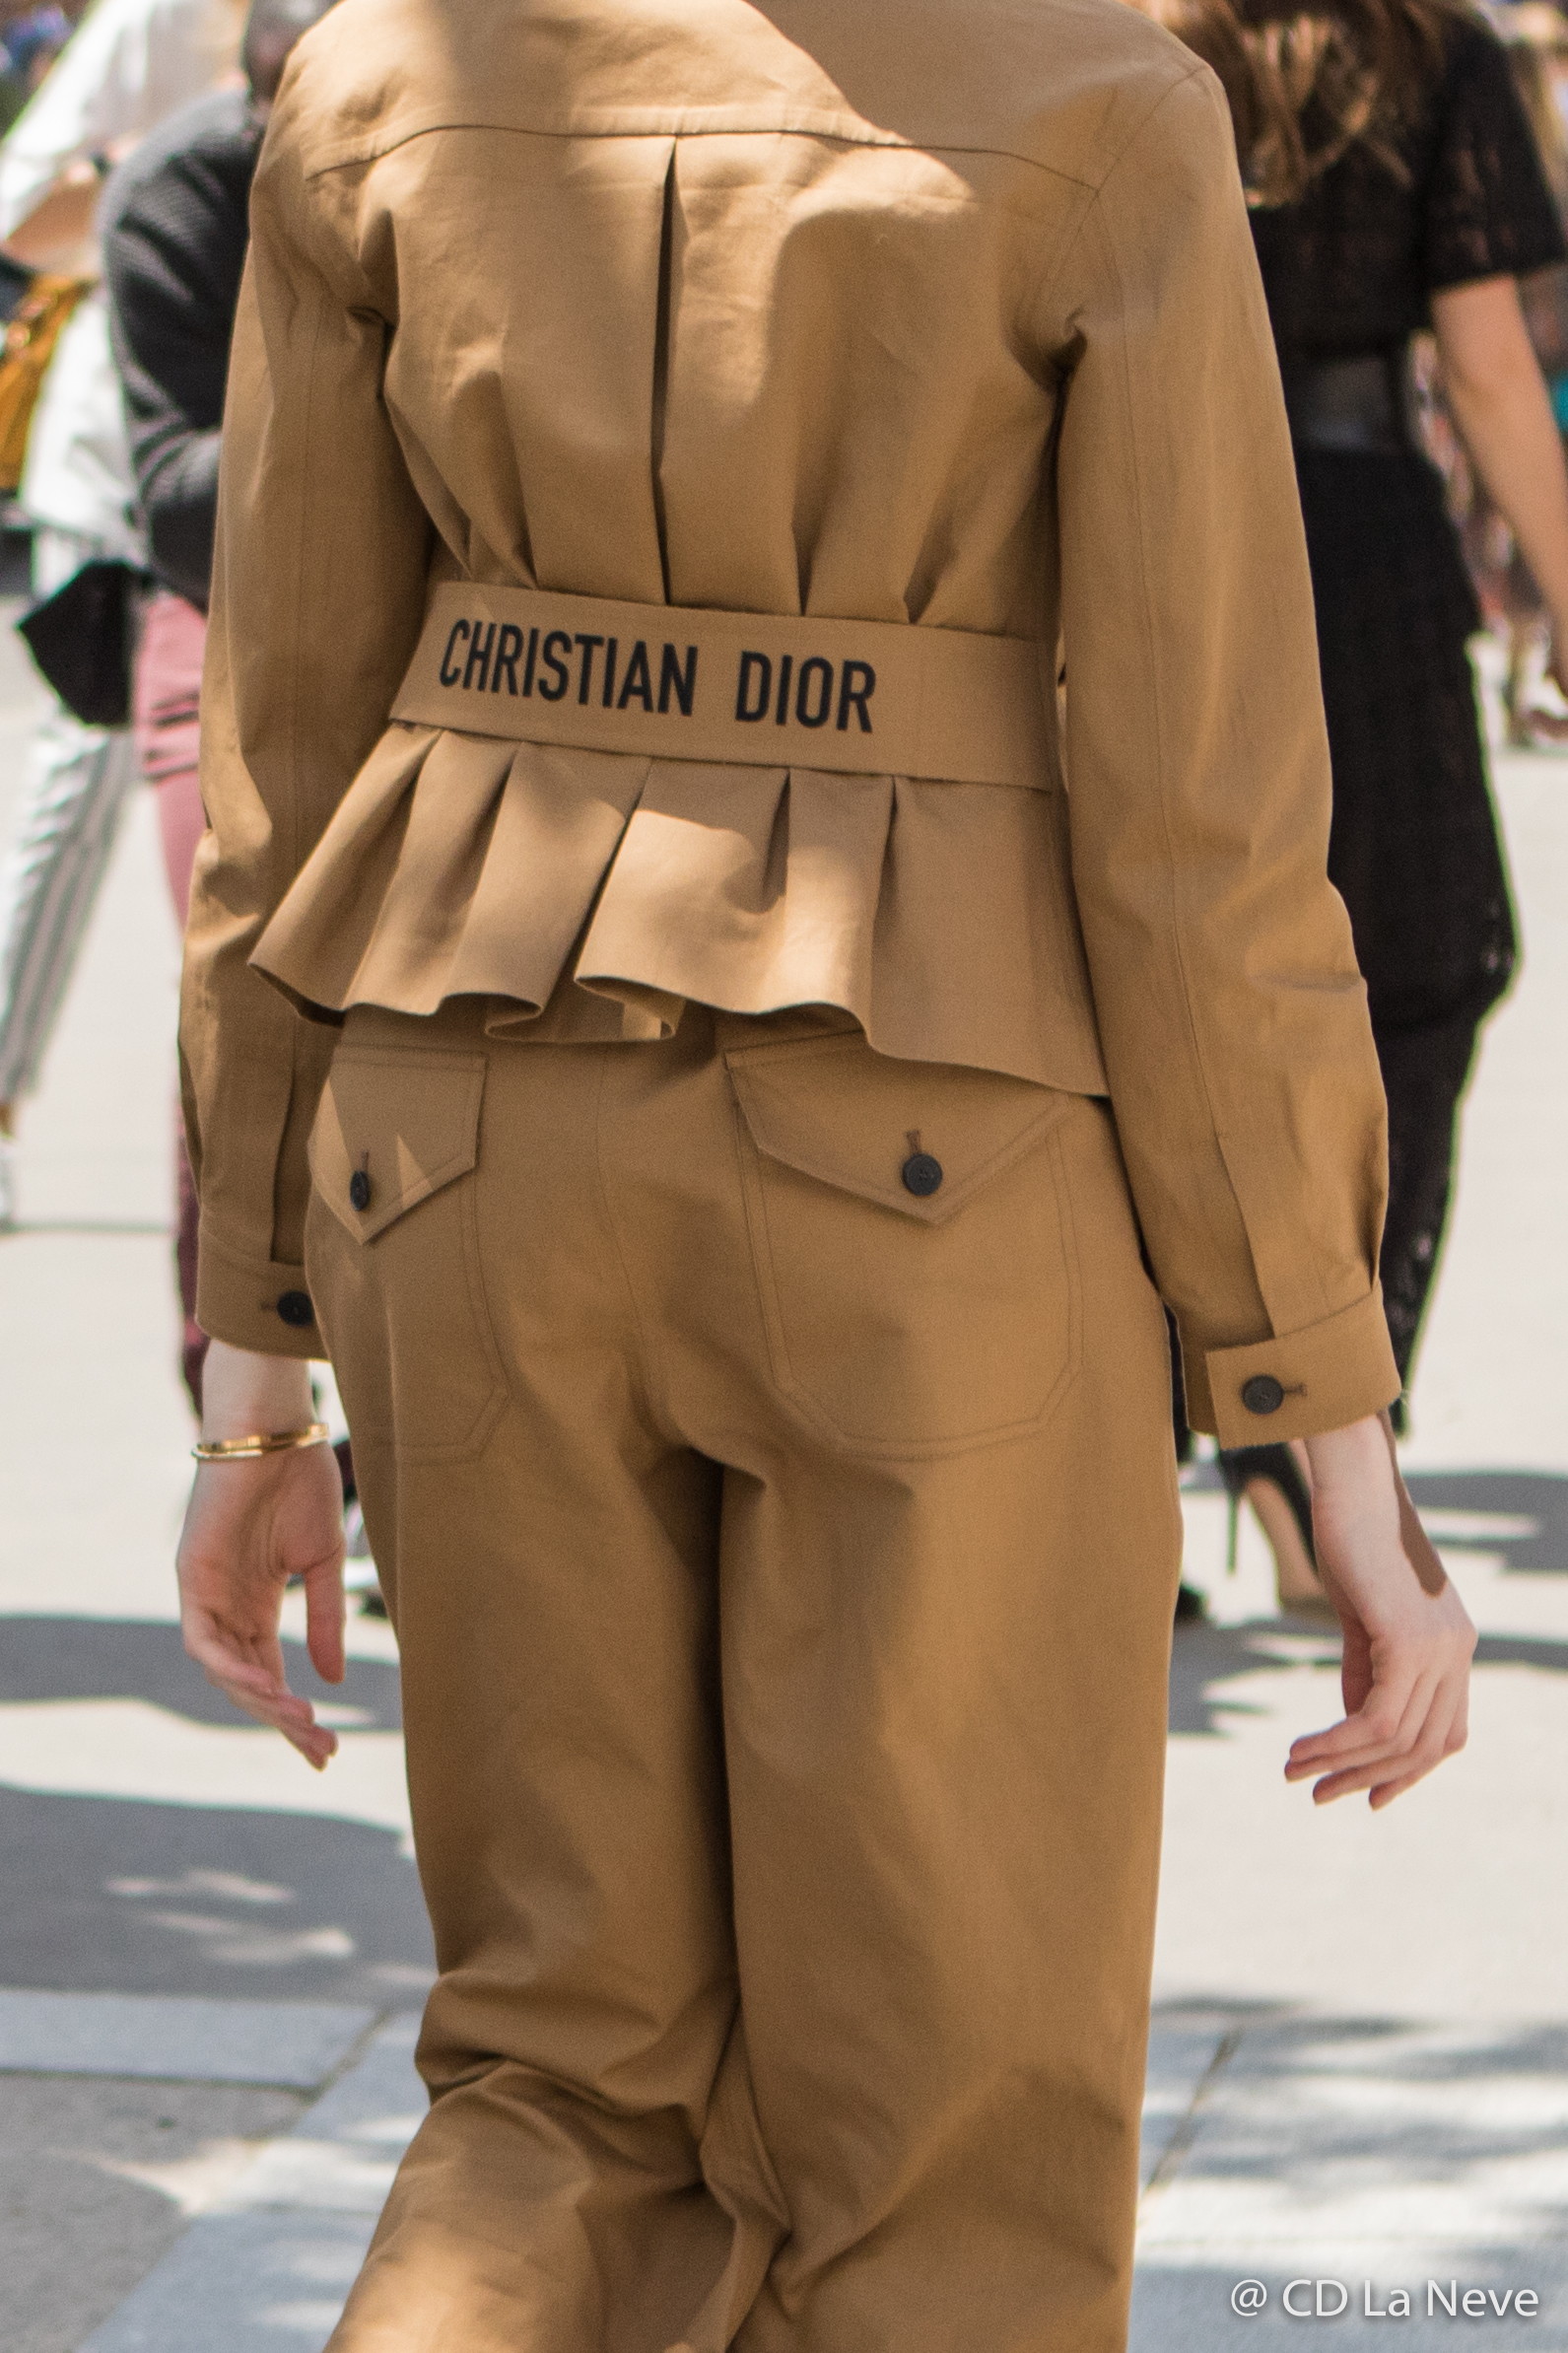 Winnie Harlow Dior Haute Couture Street Style Paris Fashion Week AW17